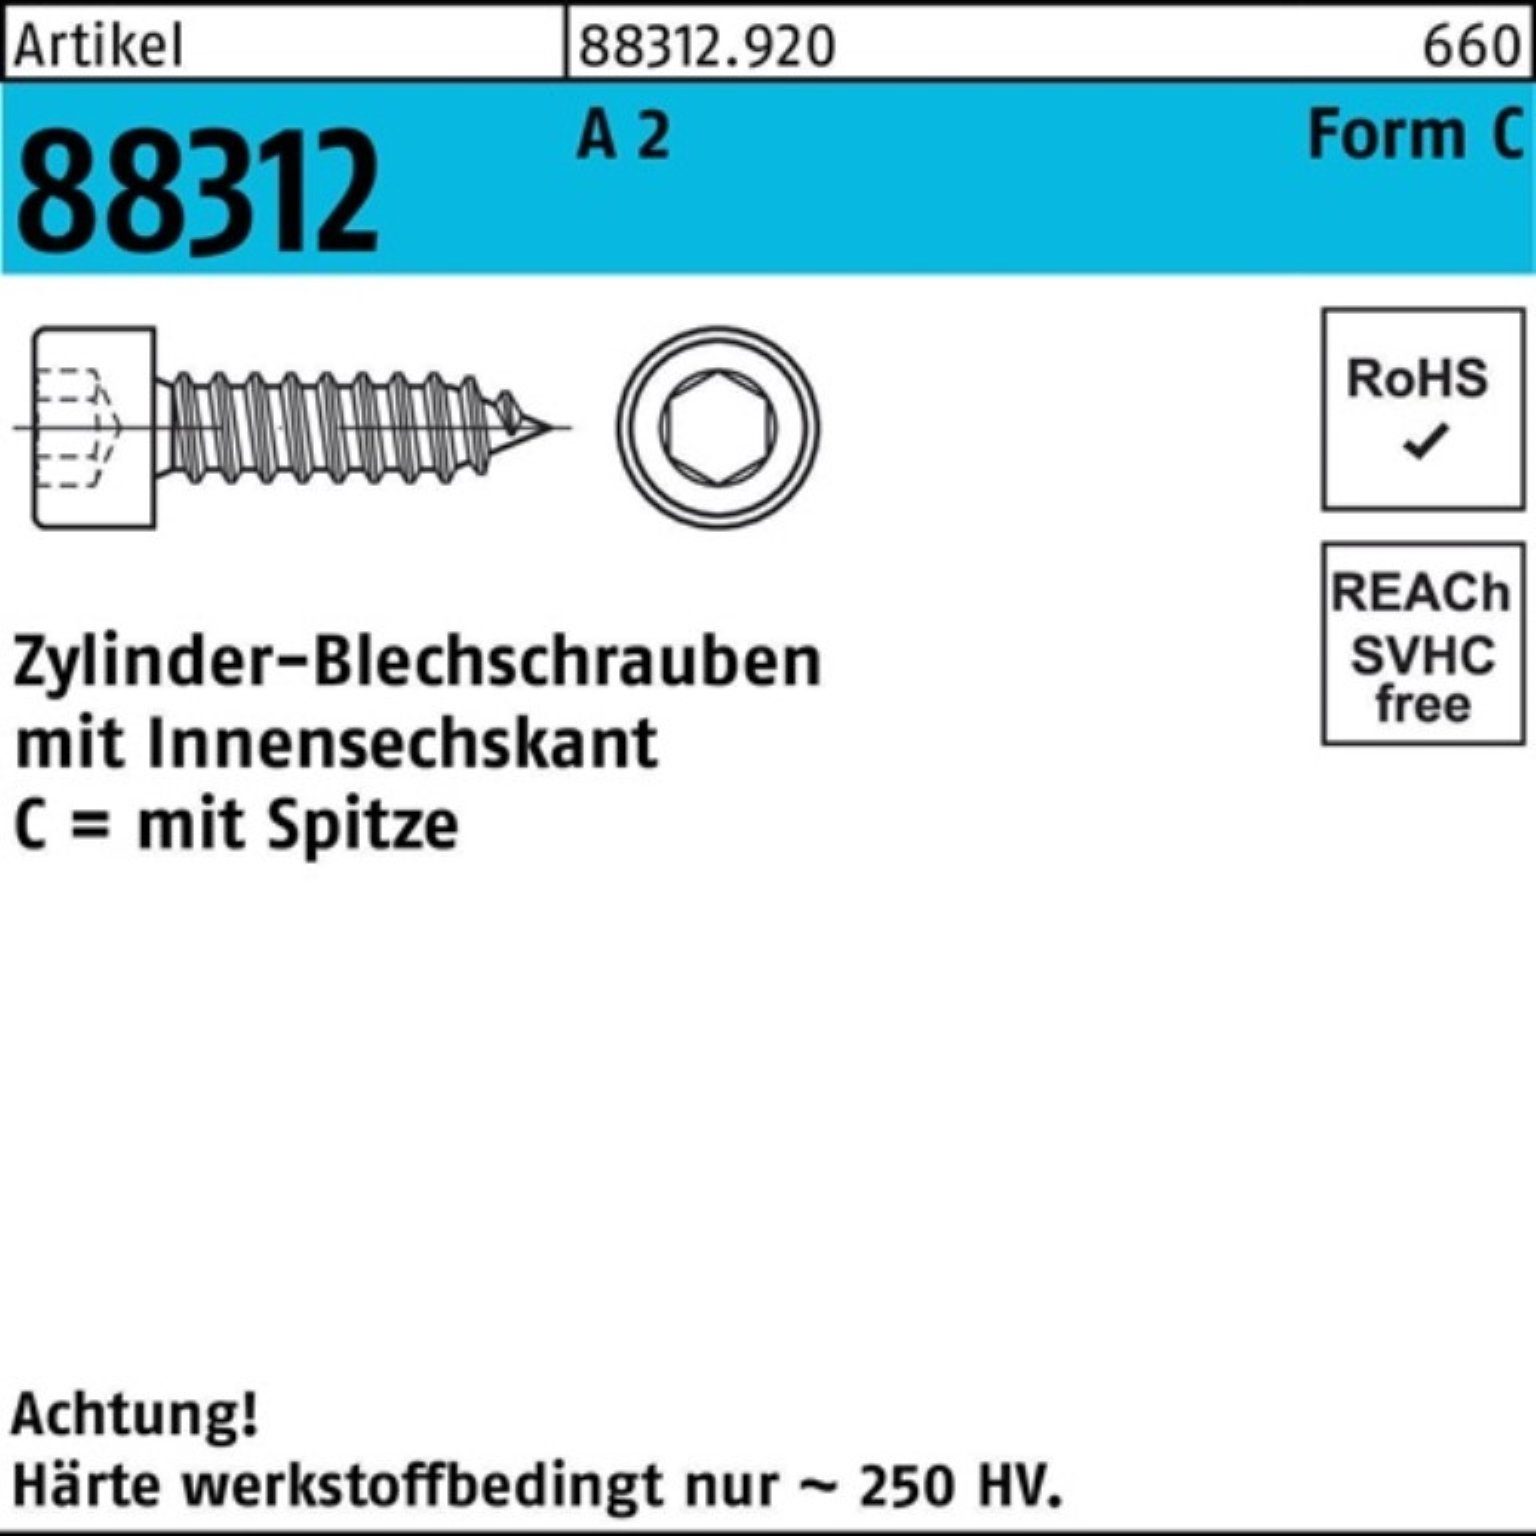 Reyher Blechschraube 200er Pack Zylinderblechschraube R 88312 Spitze/Innen-6kt C 4,8x 70 A